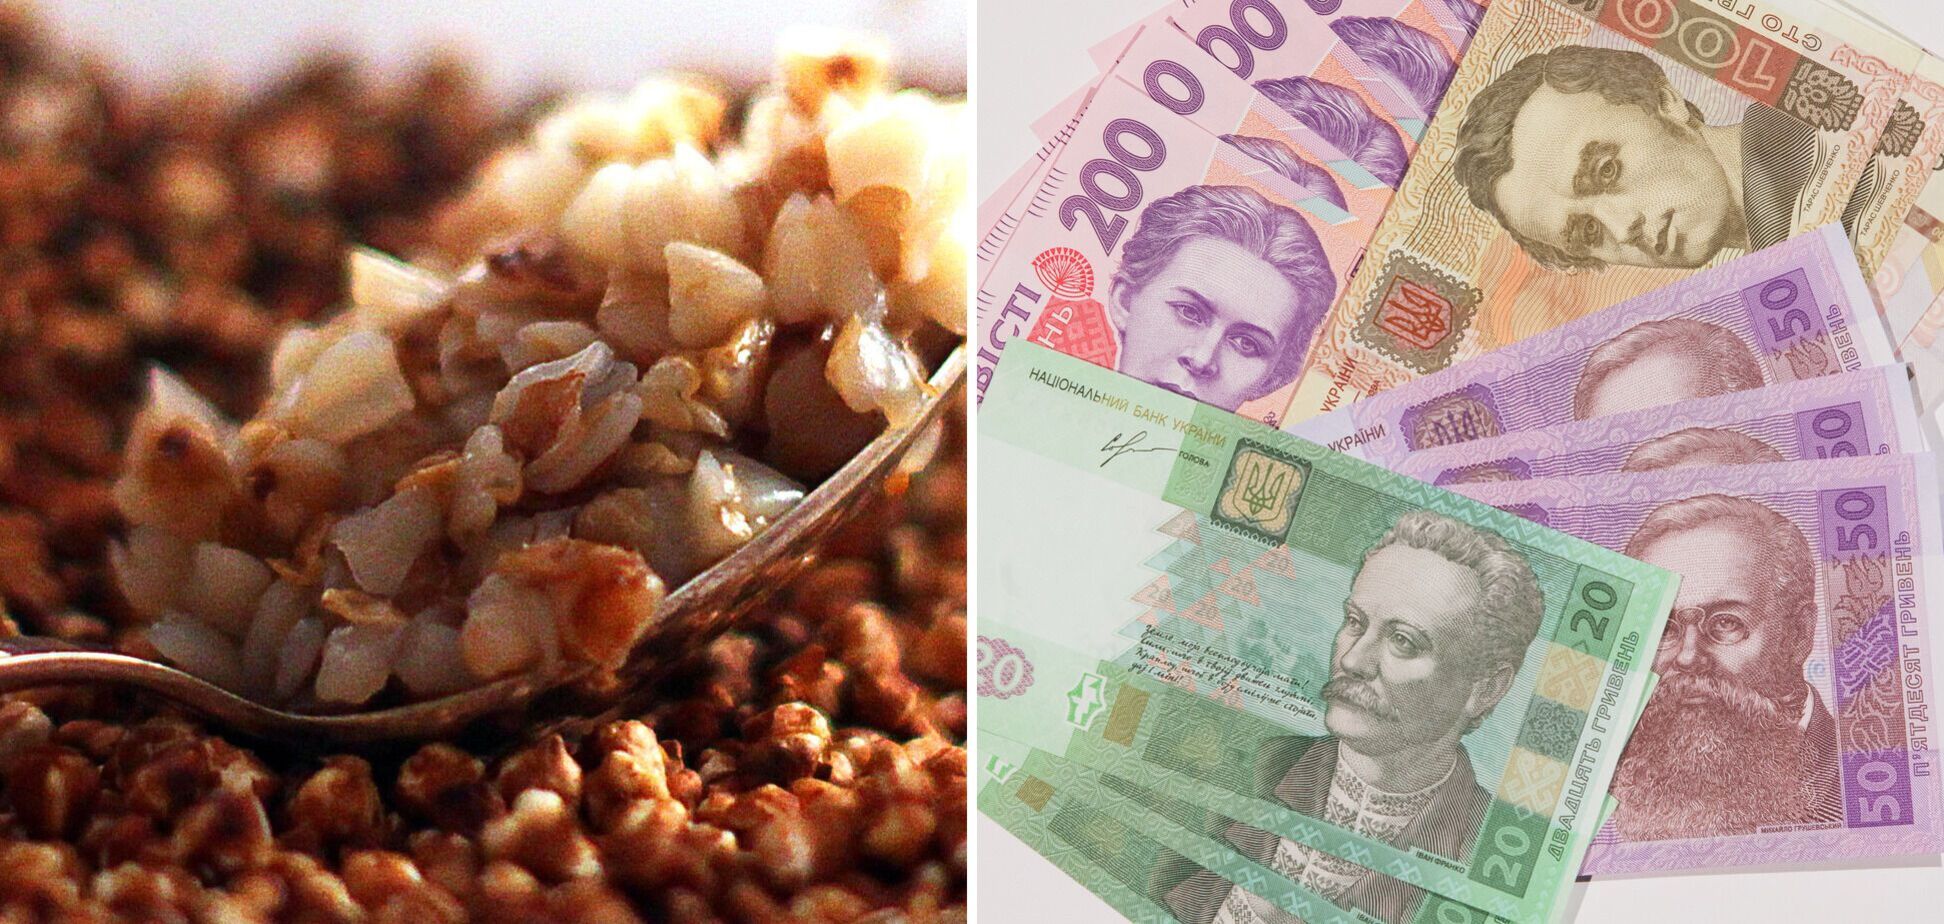 Цены на гречку в Украине могут вырасти до 70-80 грн